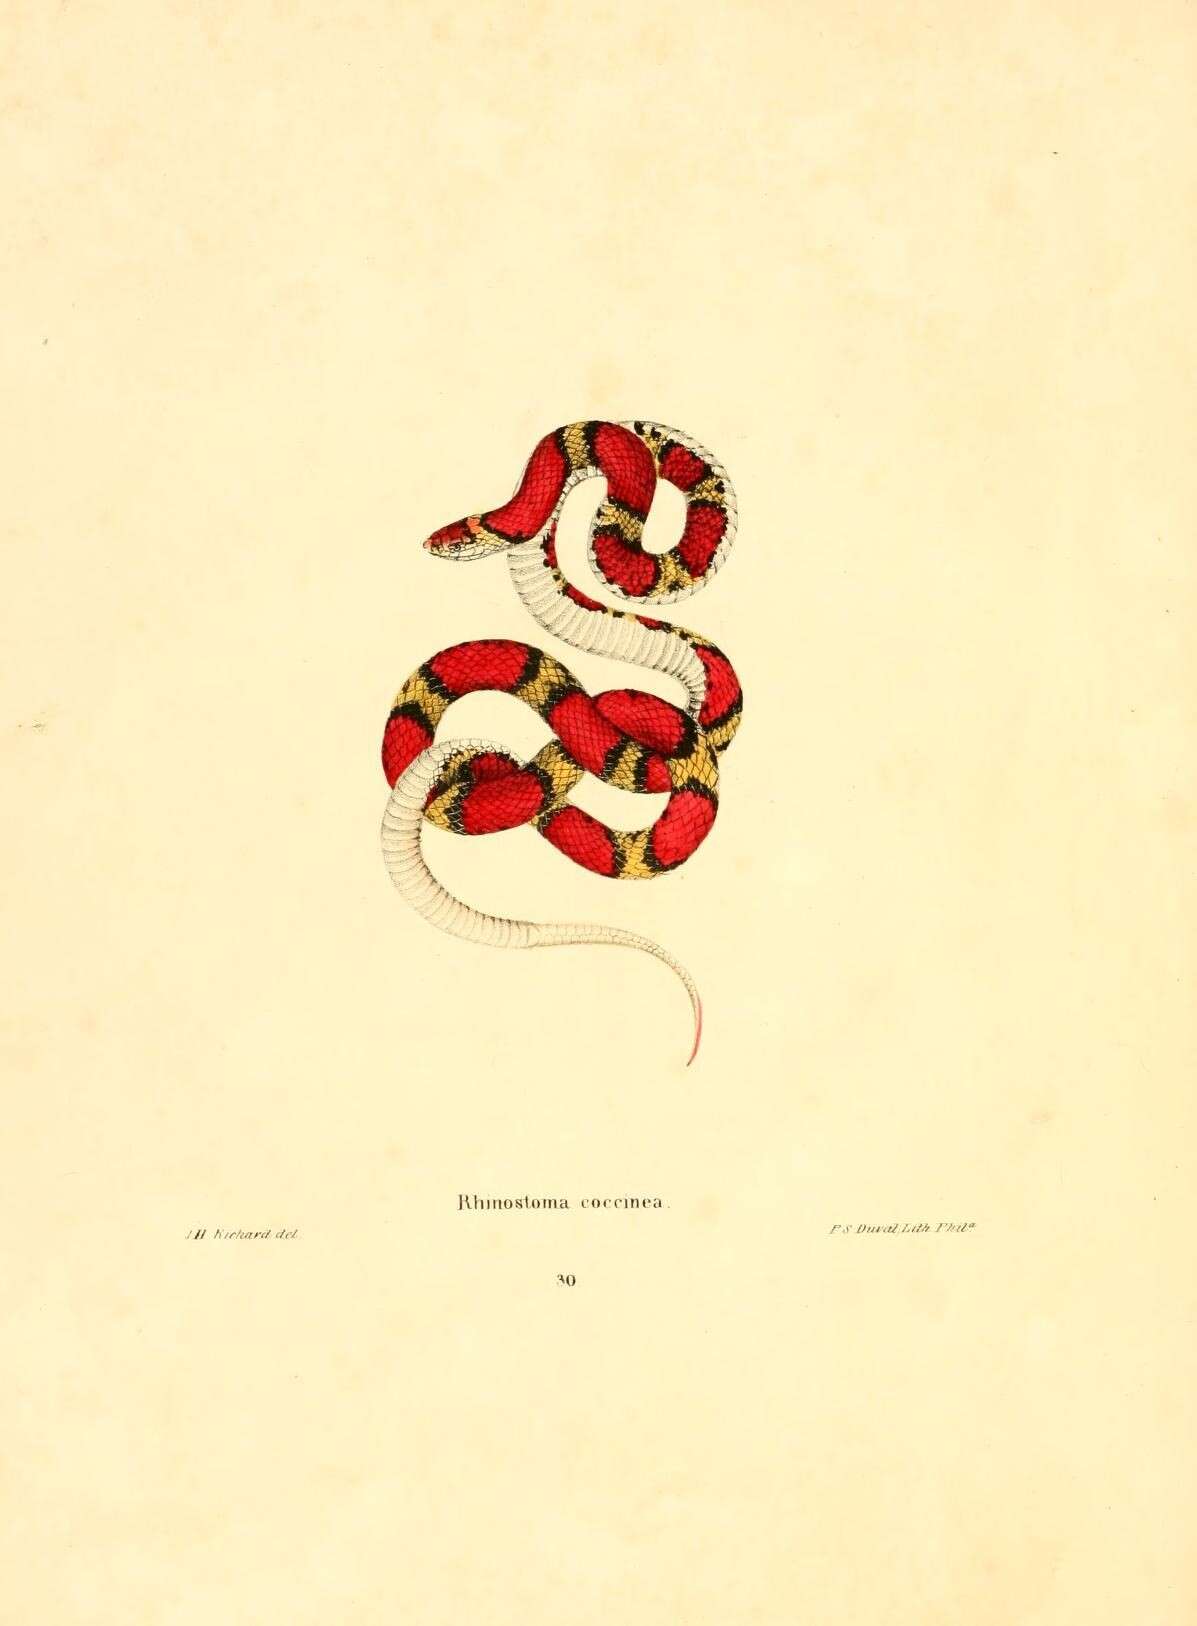 Image of Florida Scarlet Snake